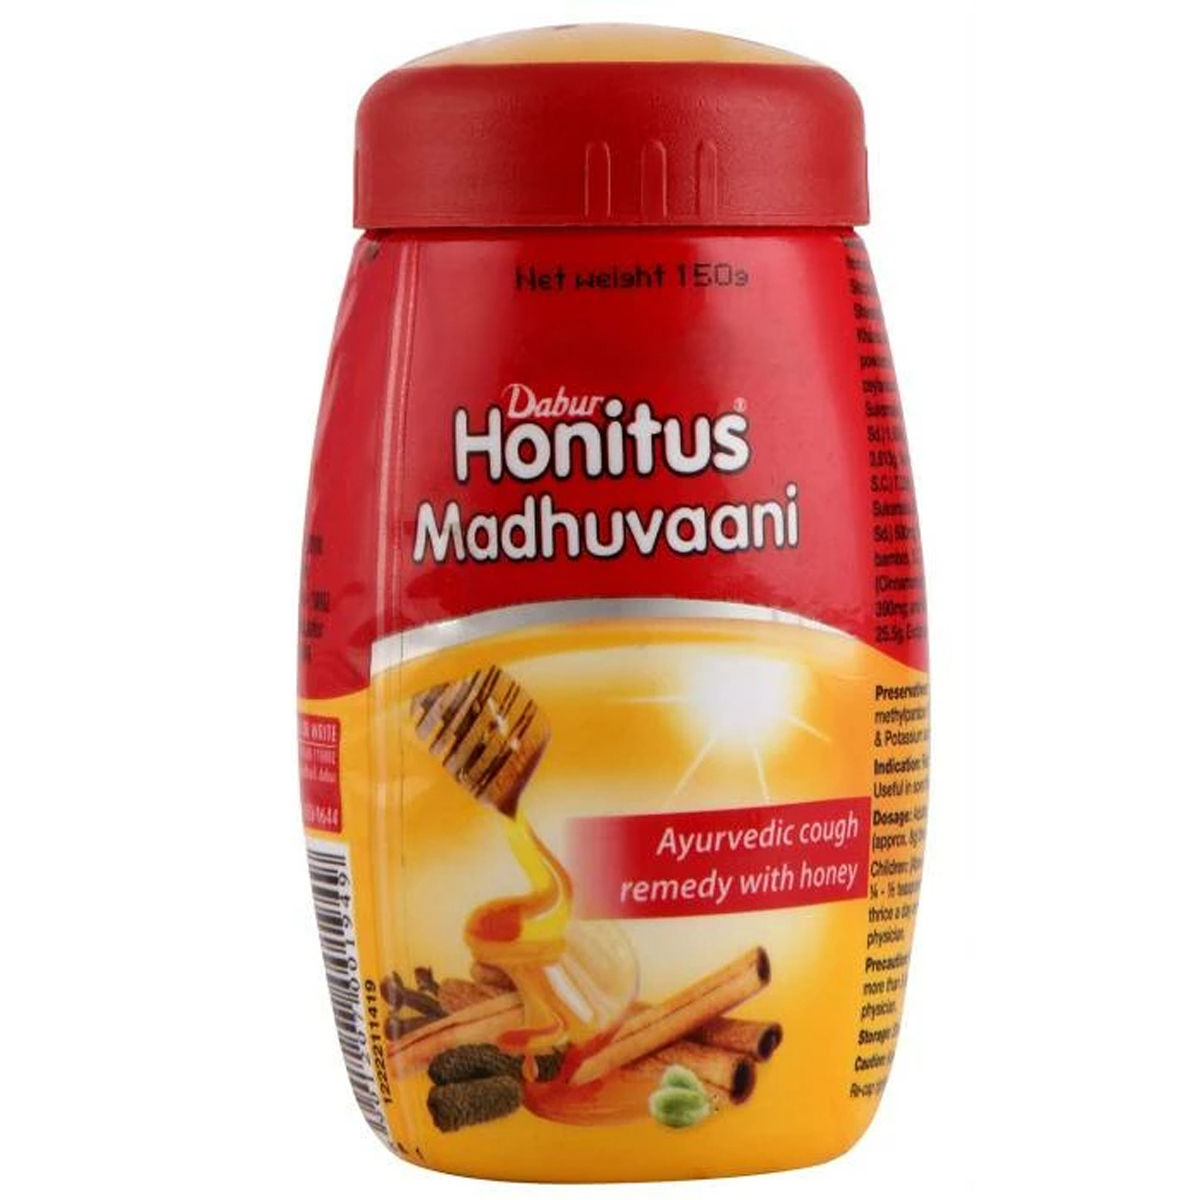 Dabur Honitus Madhuvaani, 150 gm, Pack of 1 